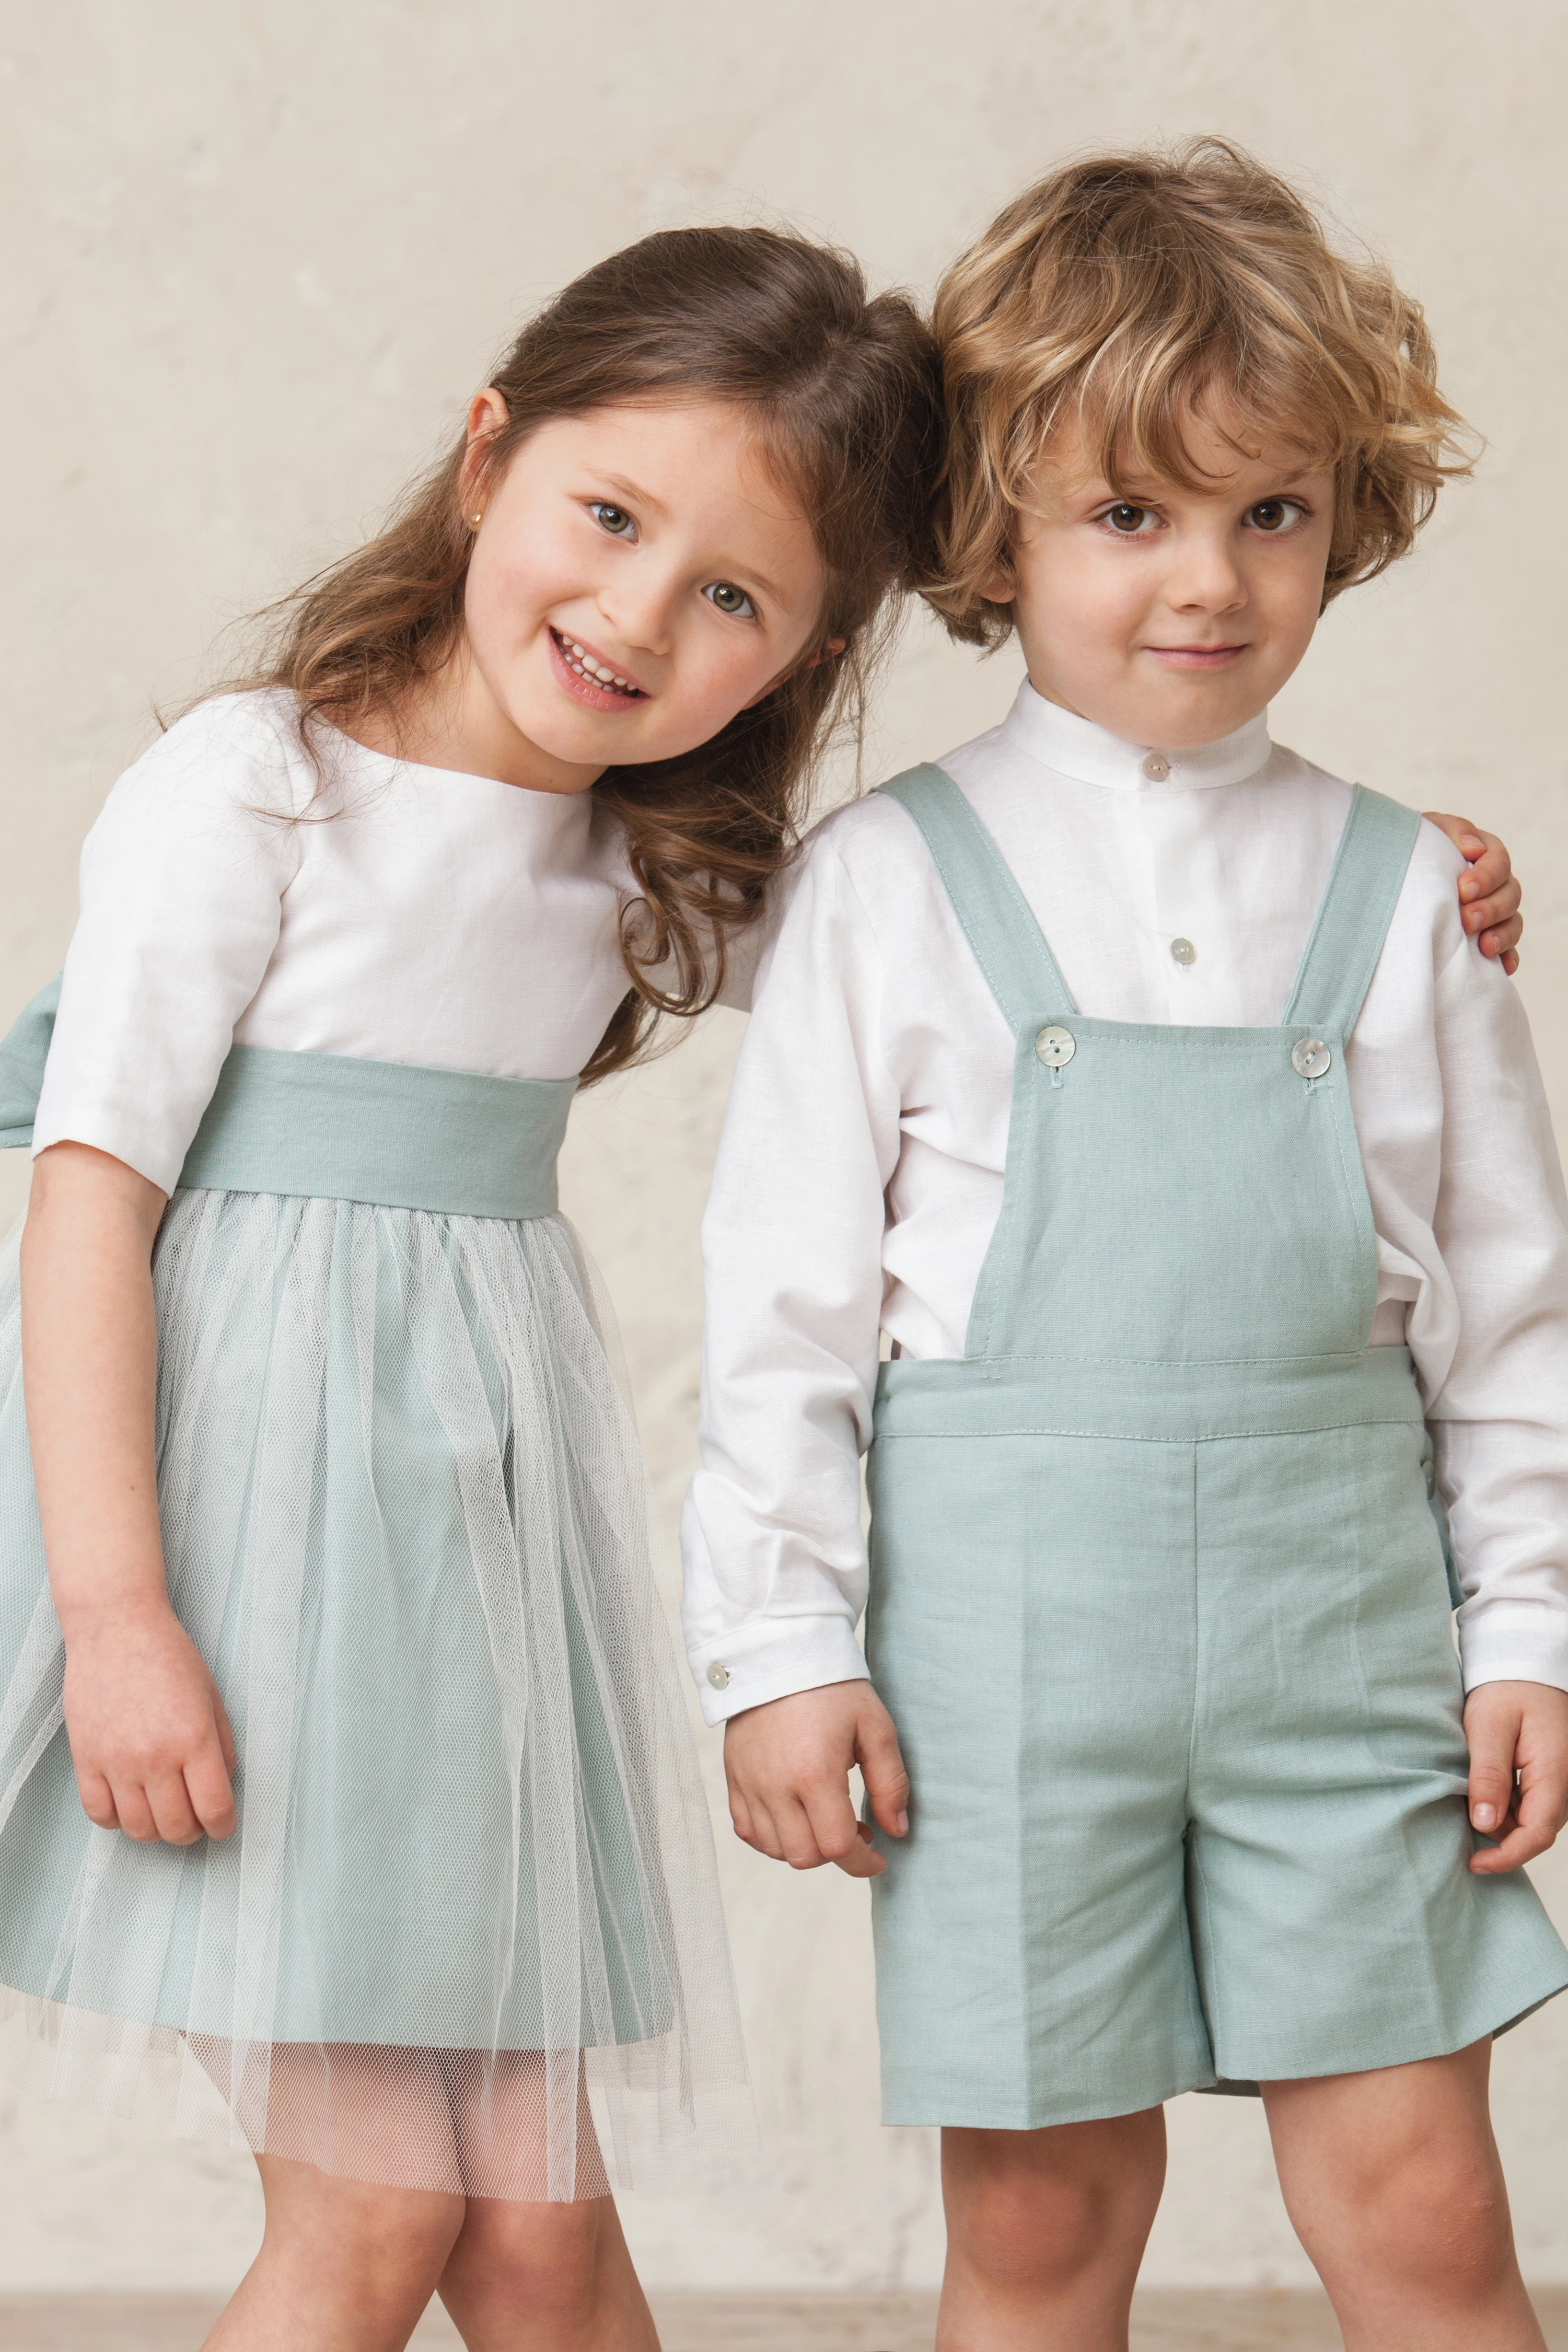 mejor ropa ceremonia para niños | Todoboda.com